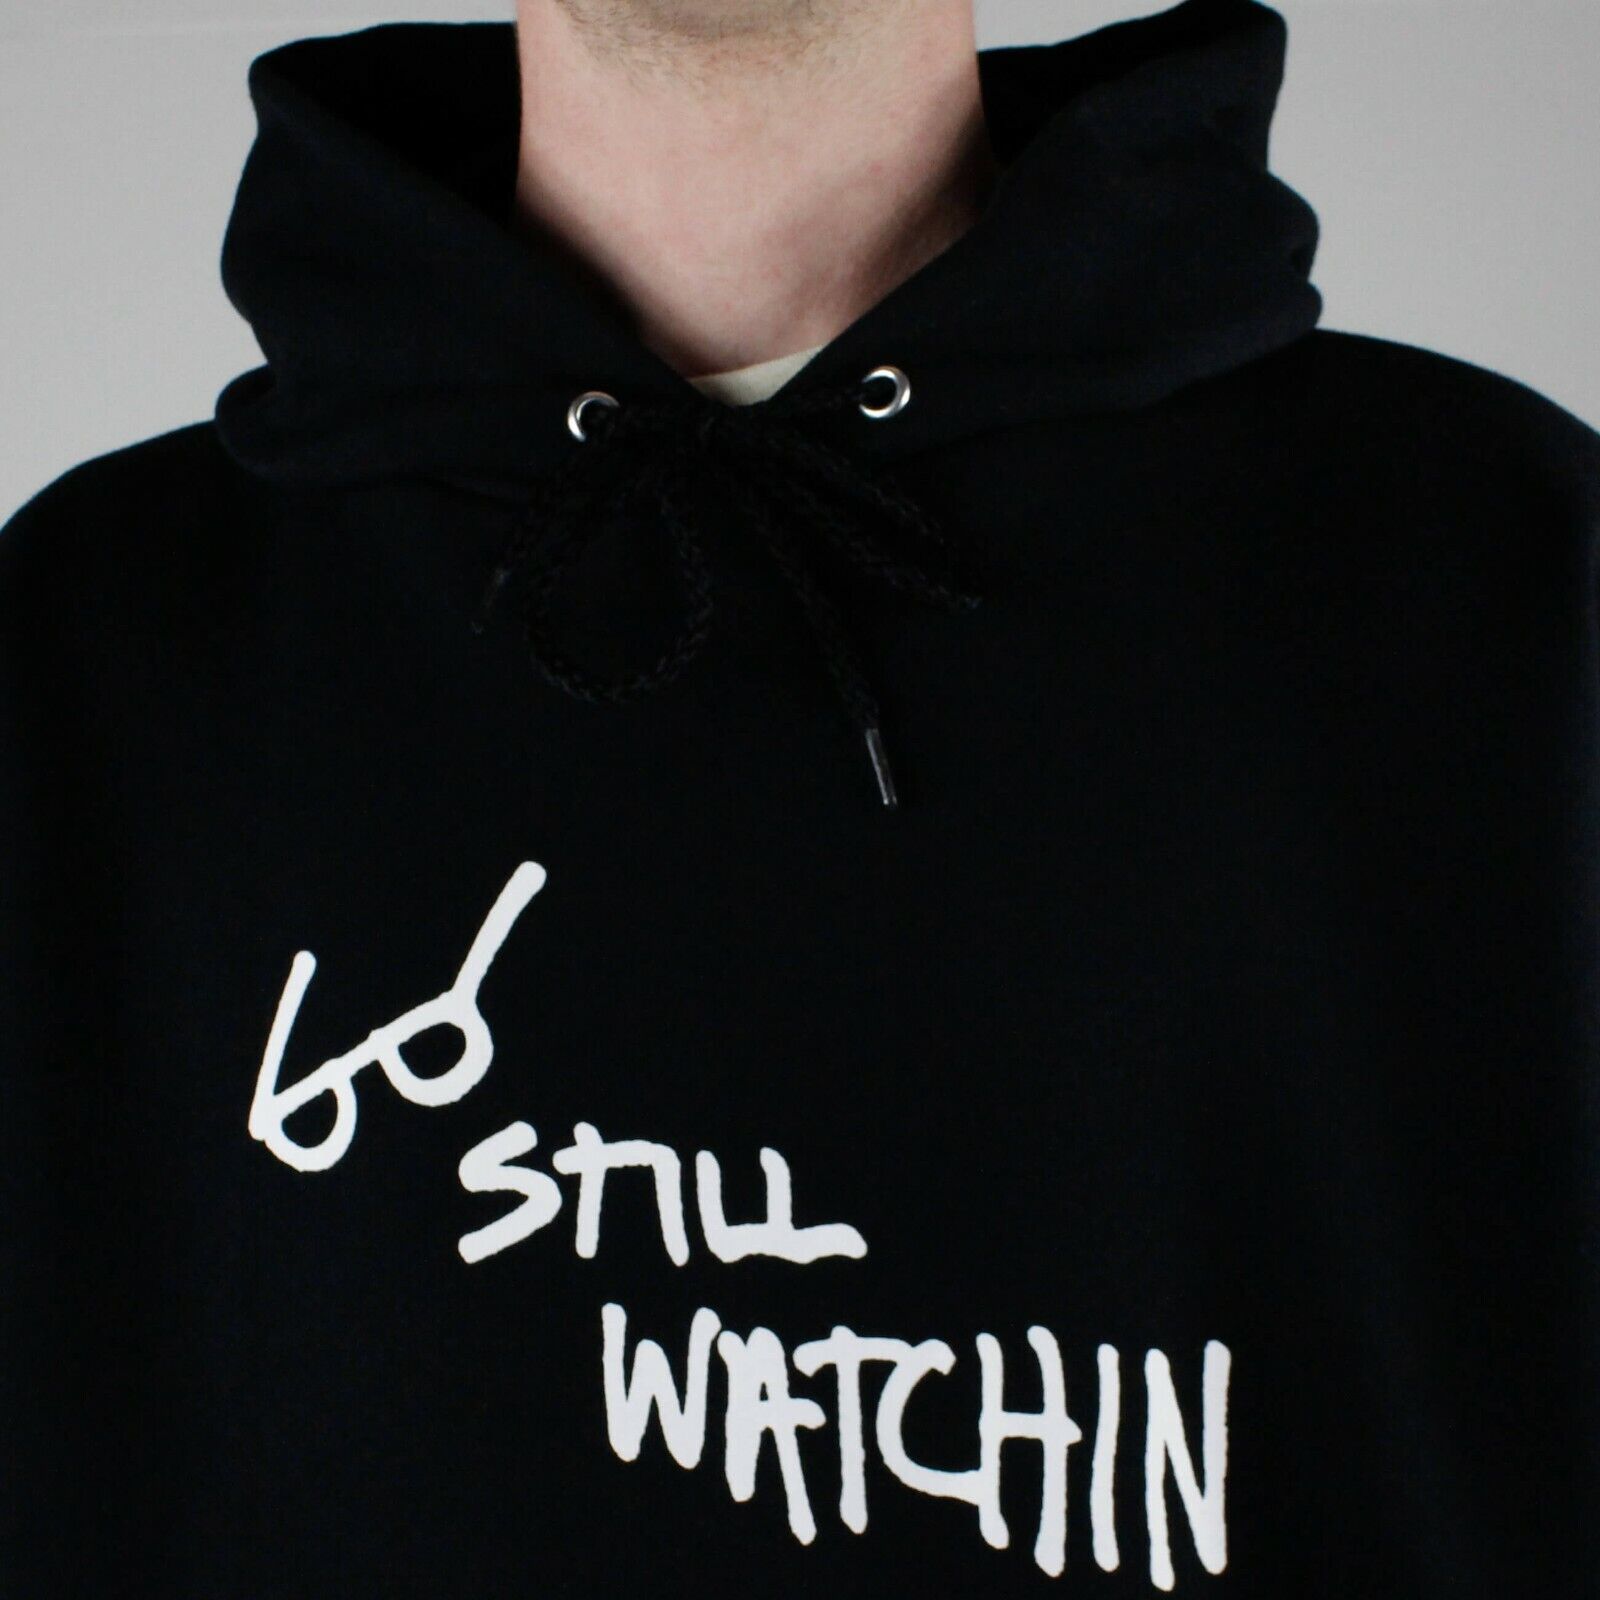 Thrasher Still Watchin Hoodie Hooded Sweatshirt – Black in size L,XL